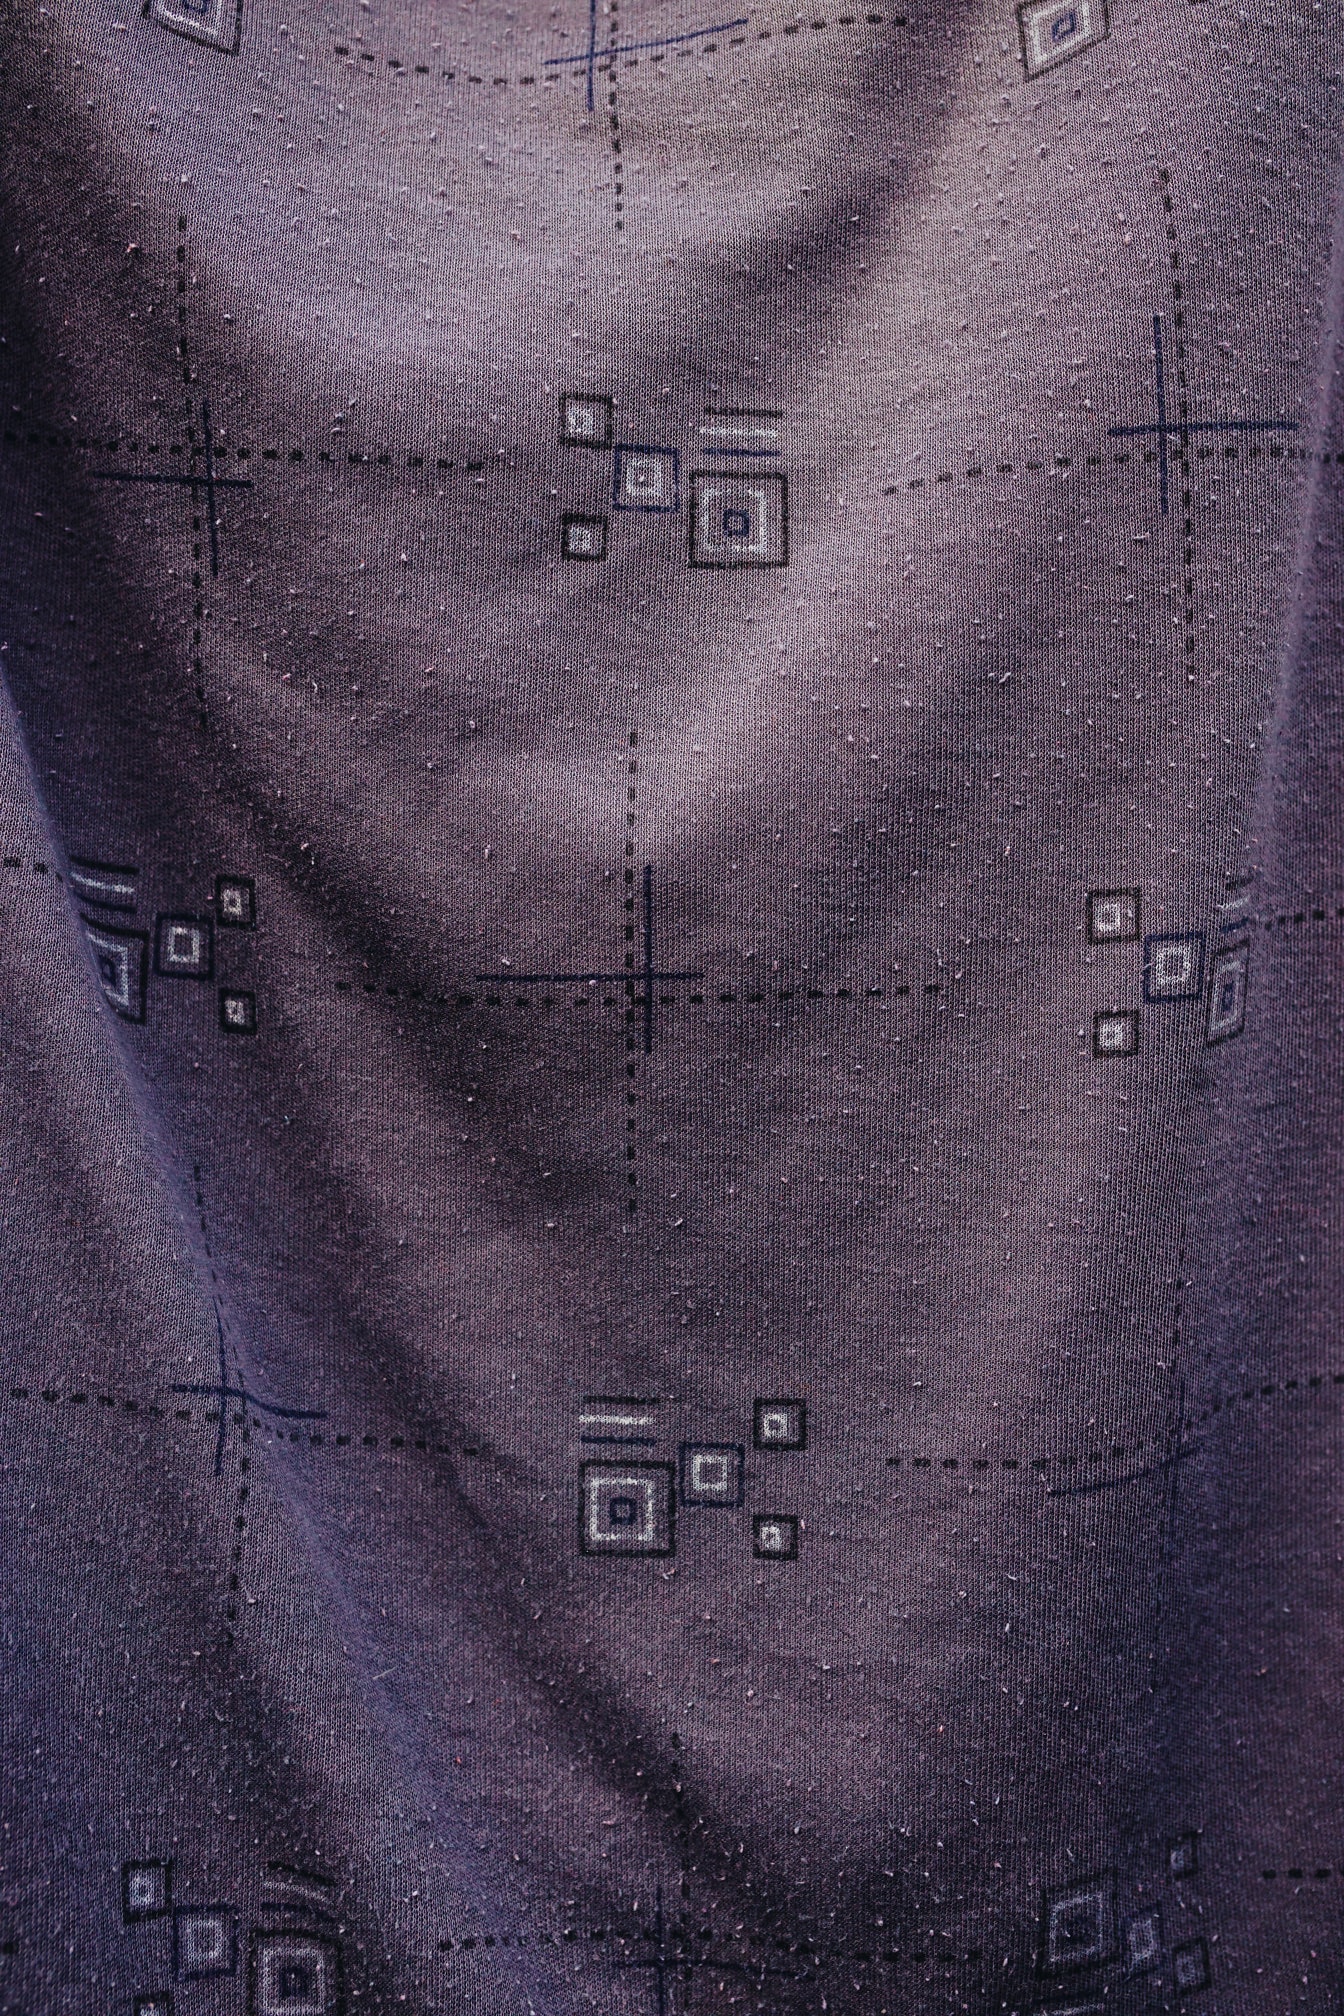 Bright purplish old cotton canvas texture close-up